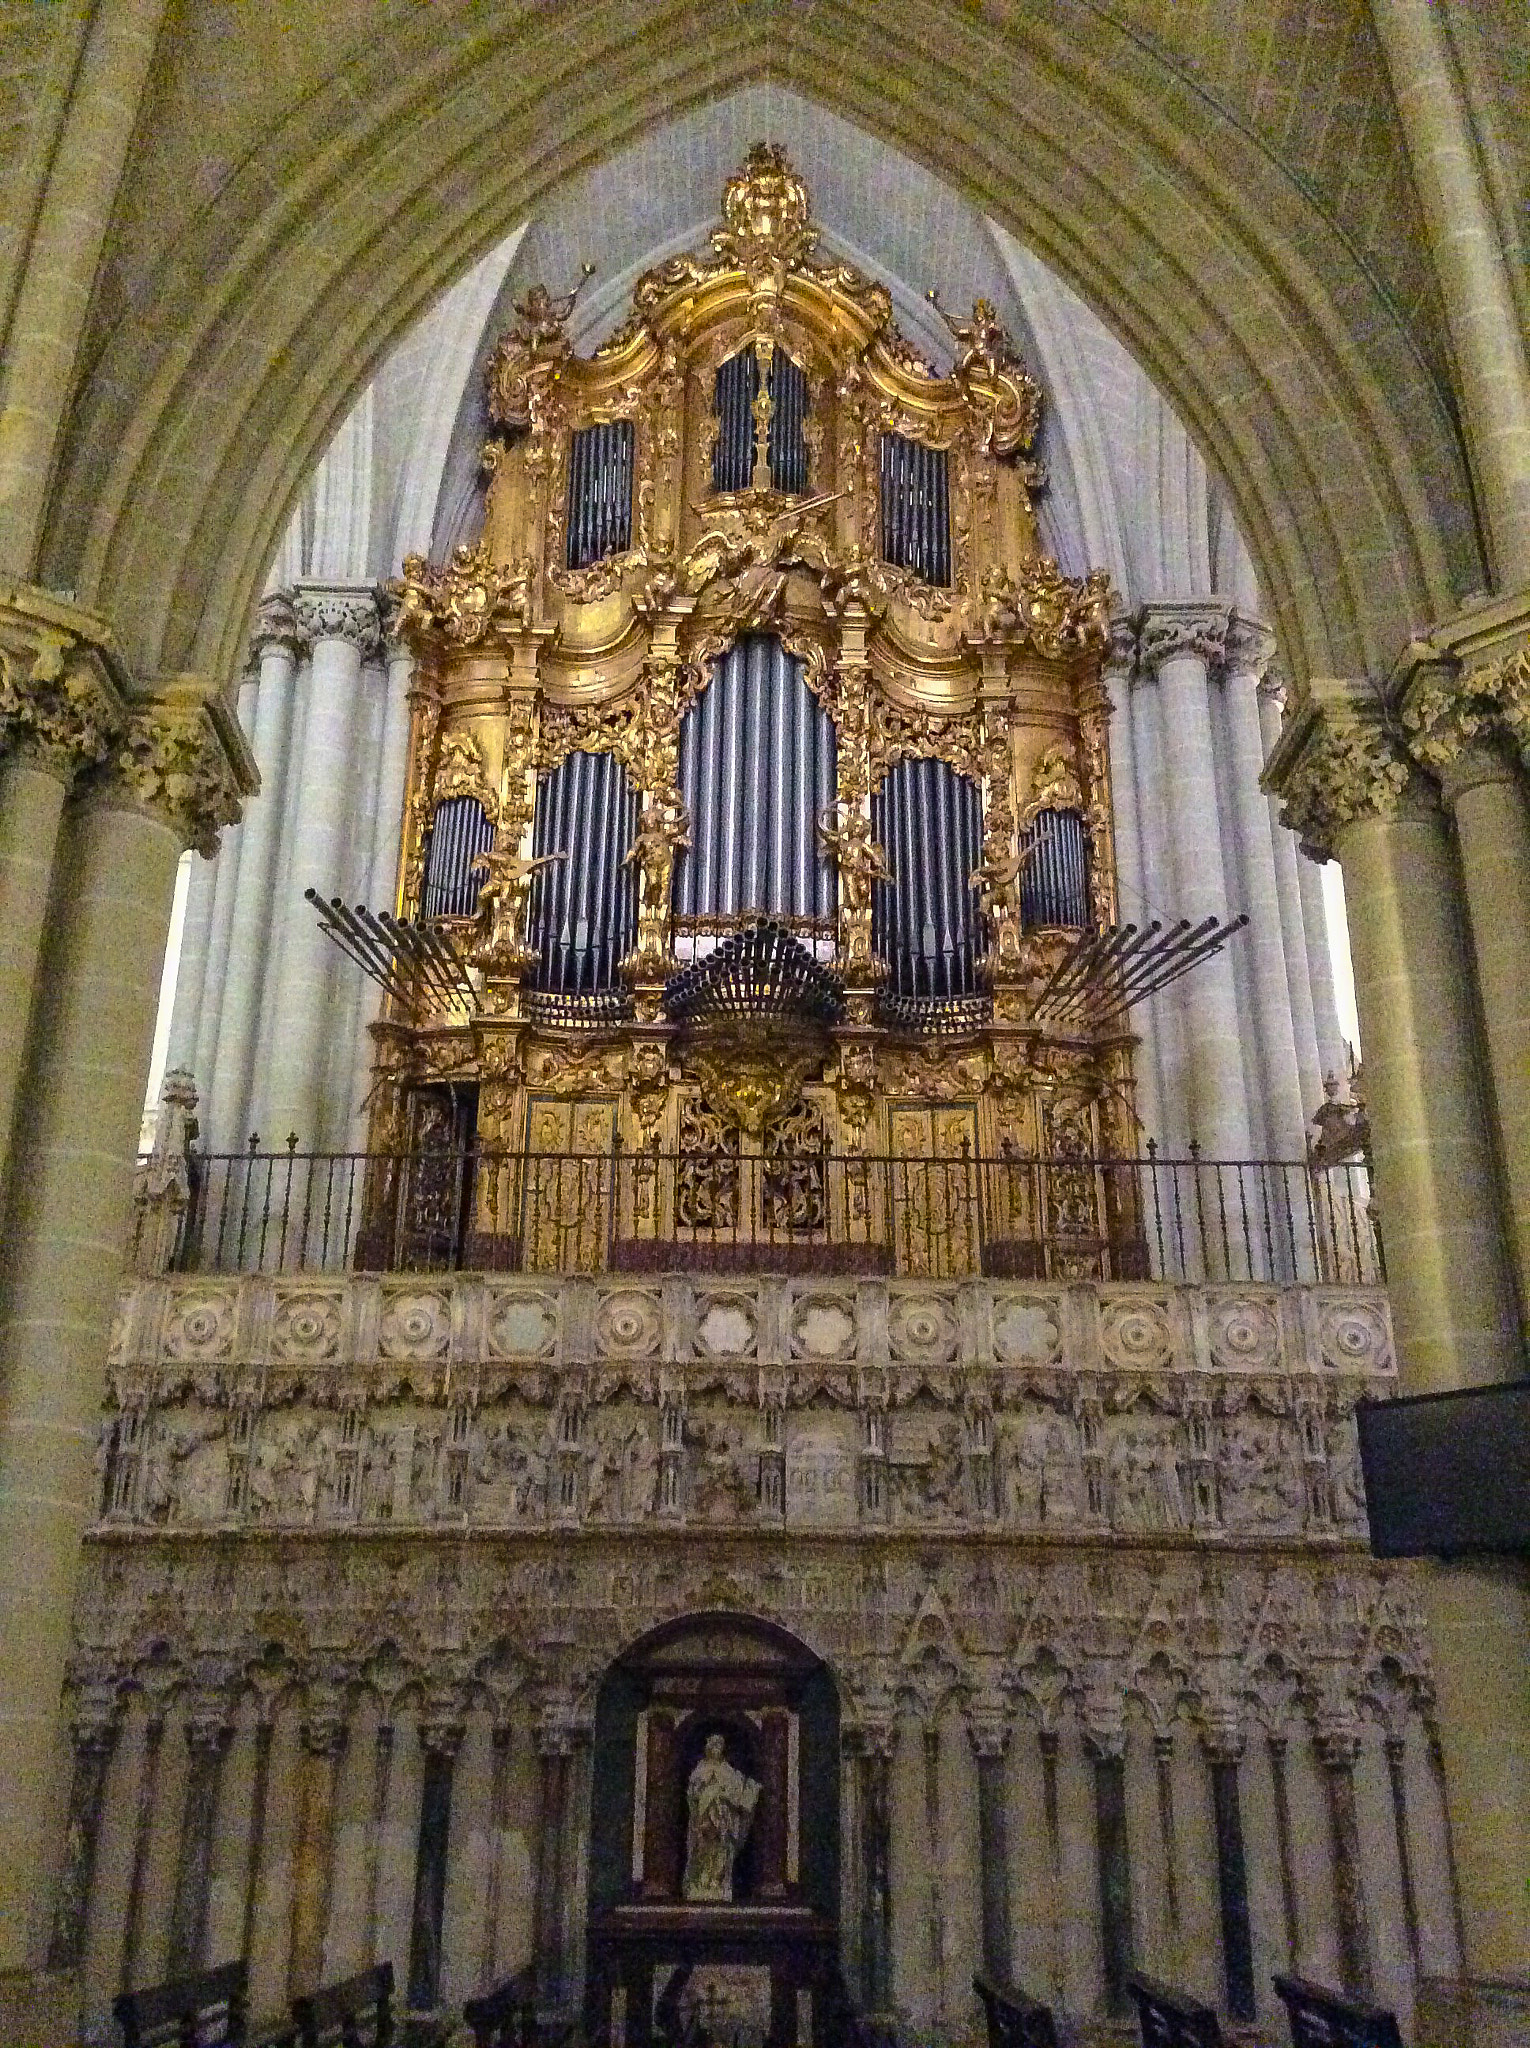 Apple iPad mini 2 sample photo. The gold plated organ in the santa iglesia catedral primada de t photography